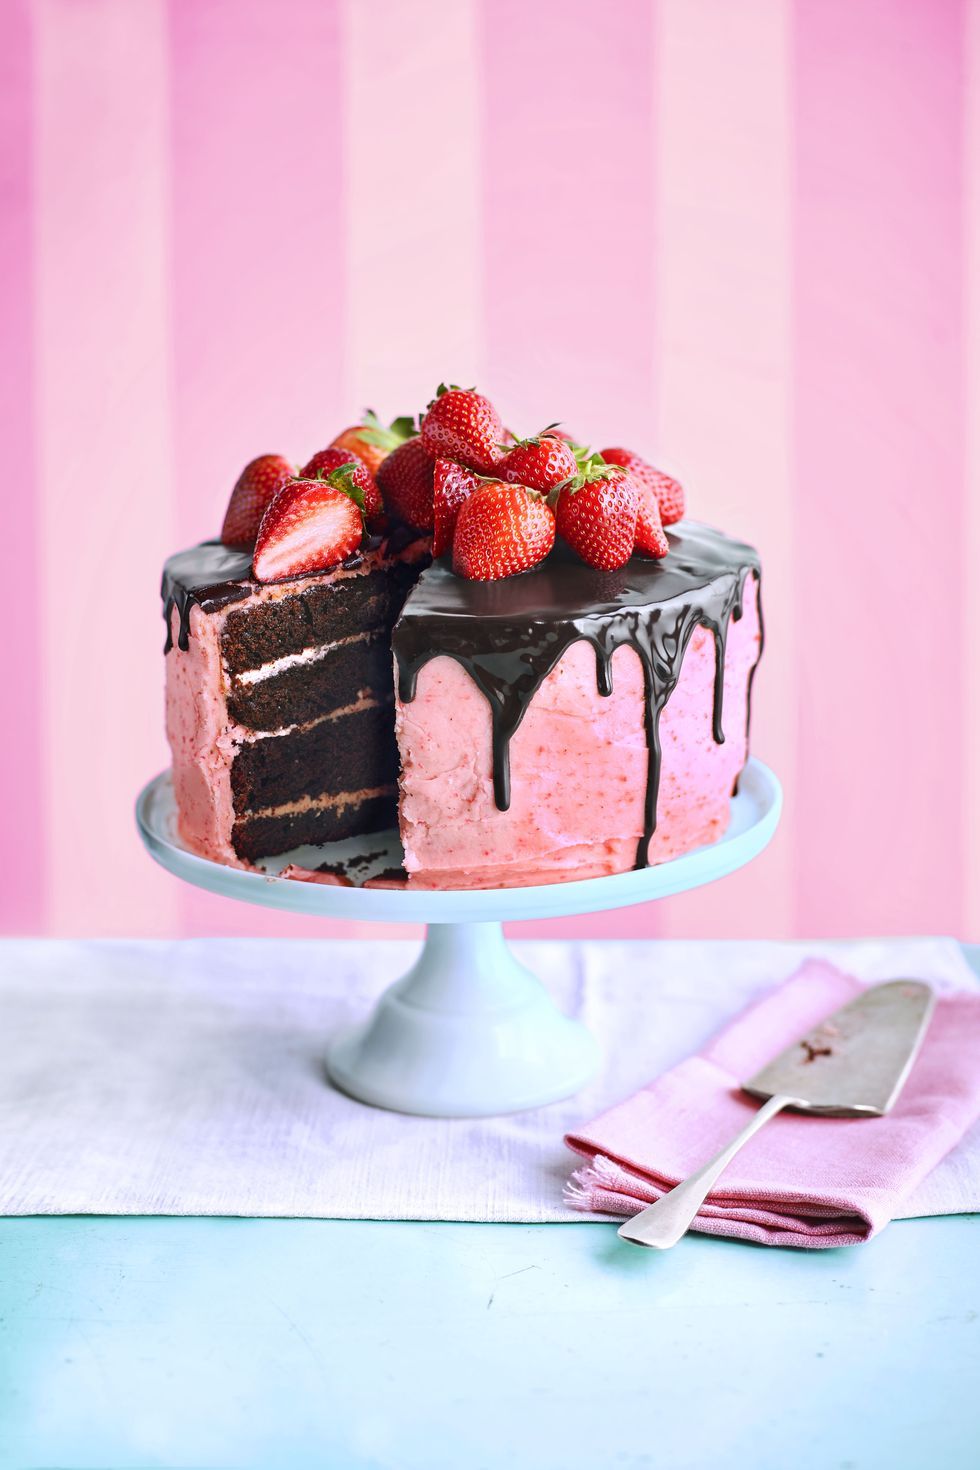 49 Cute Cake Ideas For Your Next Celebration : Austin rose